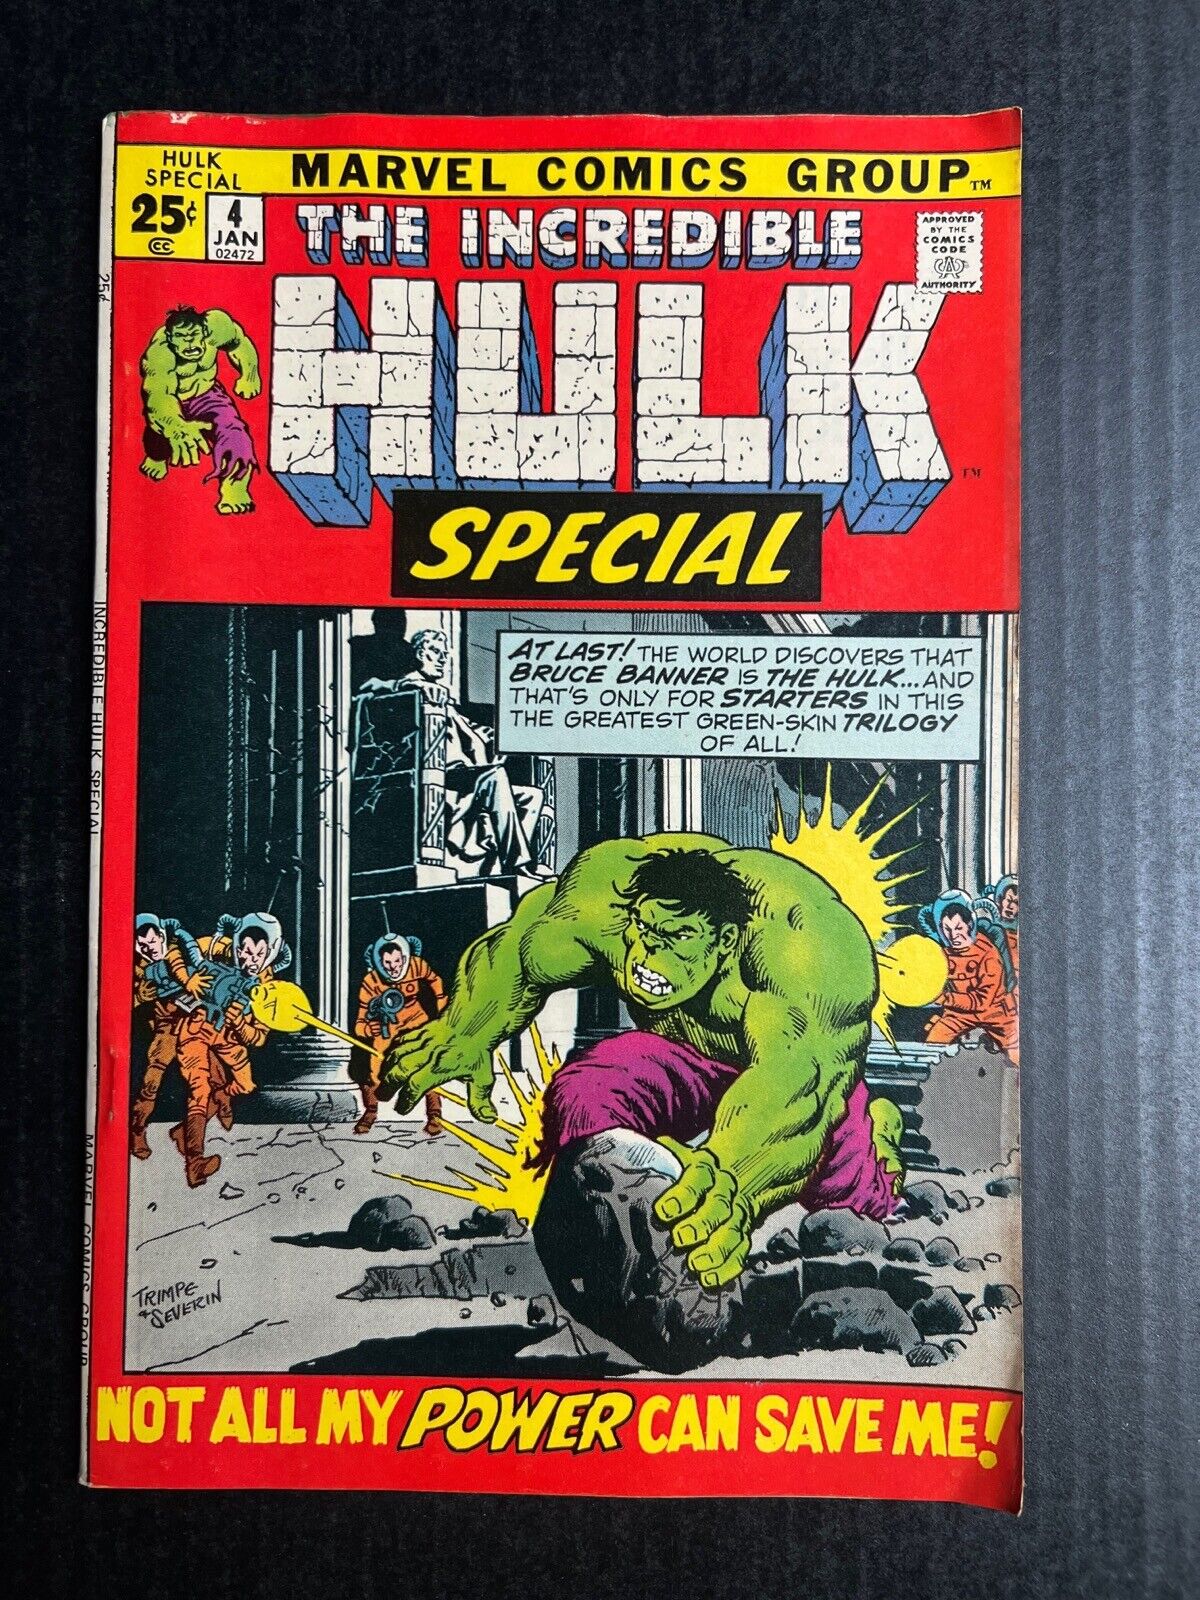 INCREDIBLE HULK Special Annual #4 January 1972 Unread Vintage Marvel